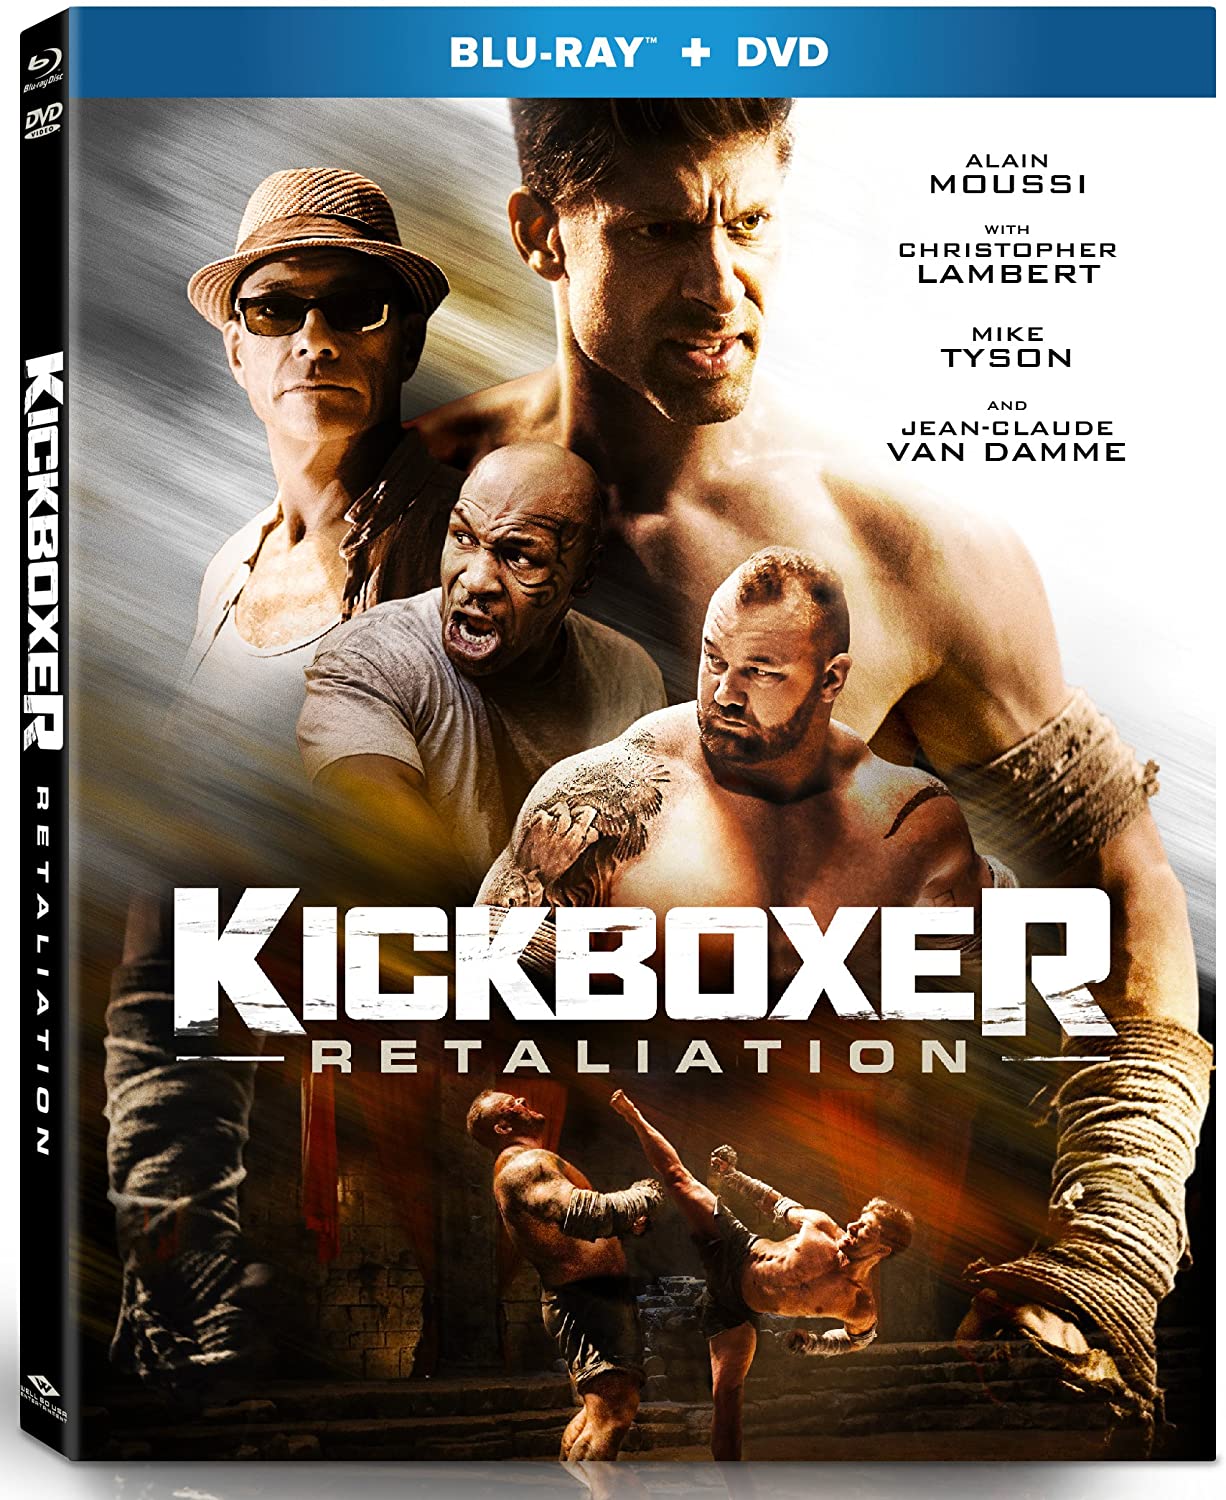 Kickboxer Retaliation - Blu-ray + DVD [Blu-ray]